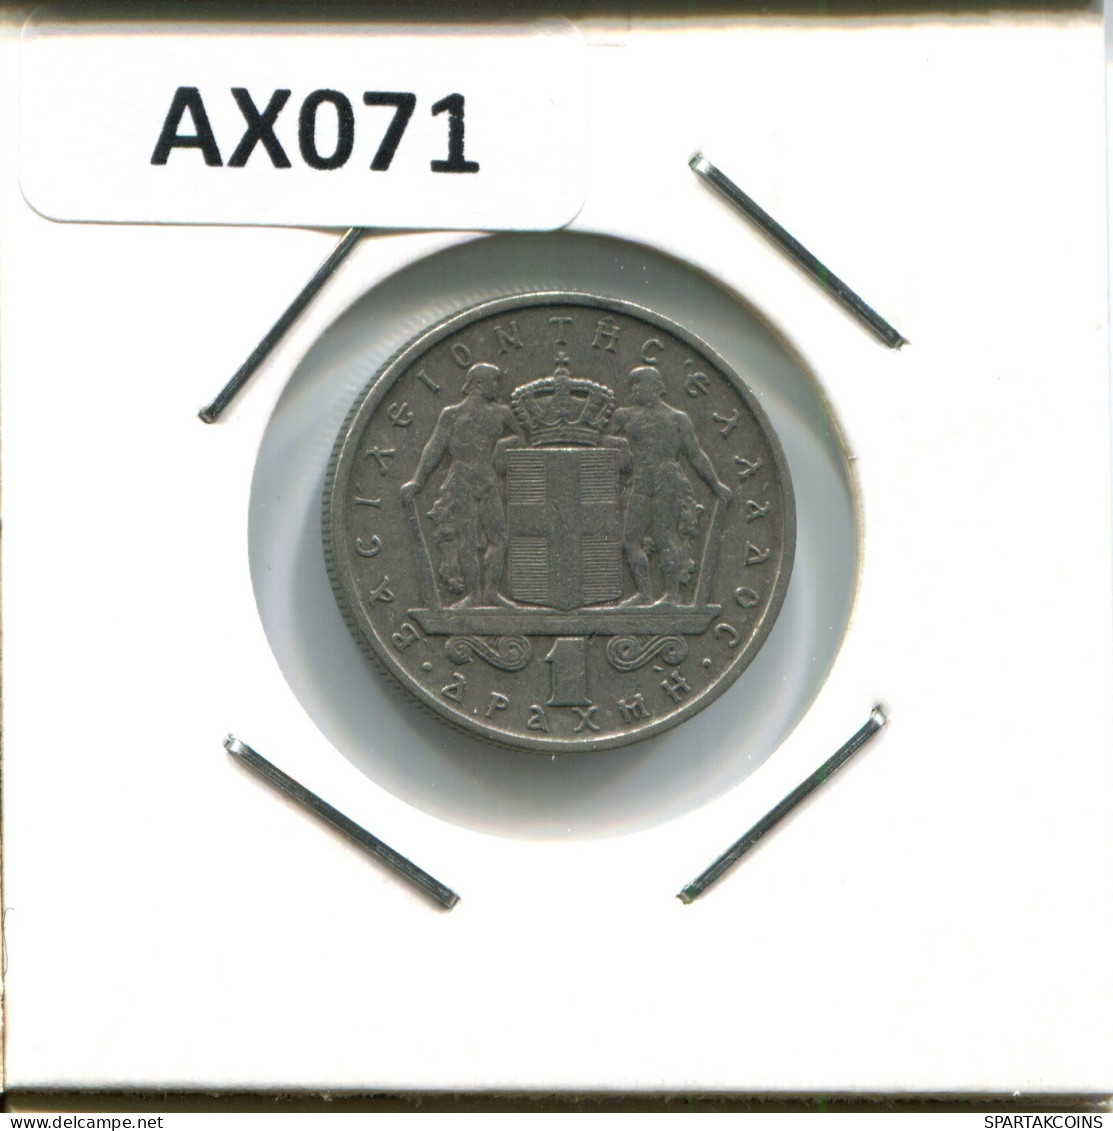 1 DRACHMA 1966 GREECE Coin #AX071.U.A - Greece